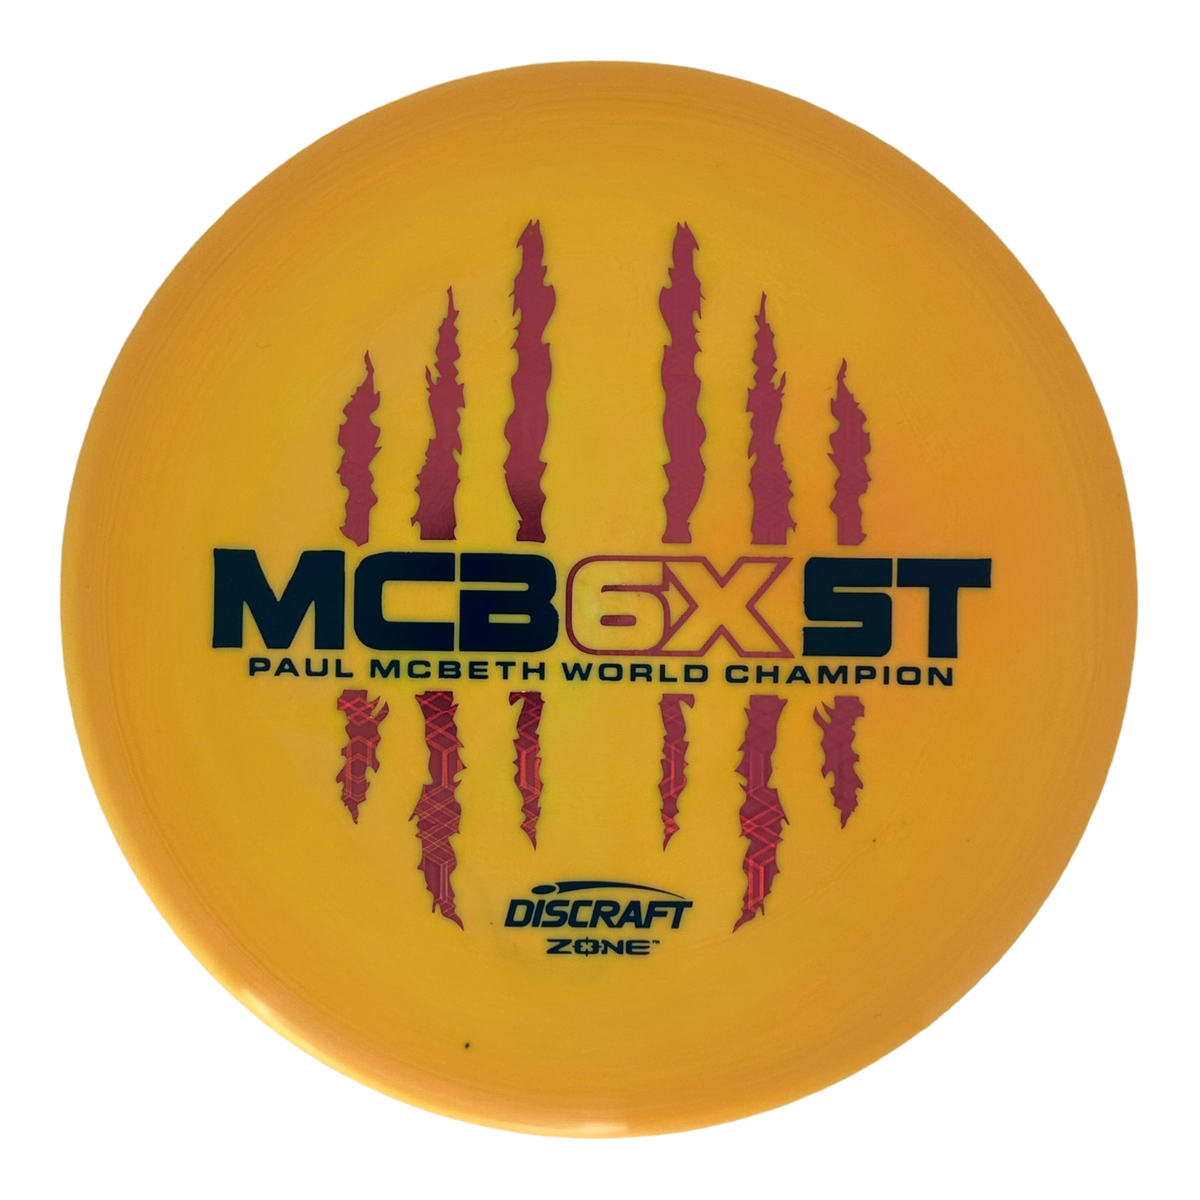 Discraft ESP Zone - Paul MCB6XST